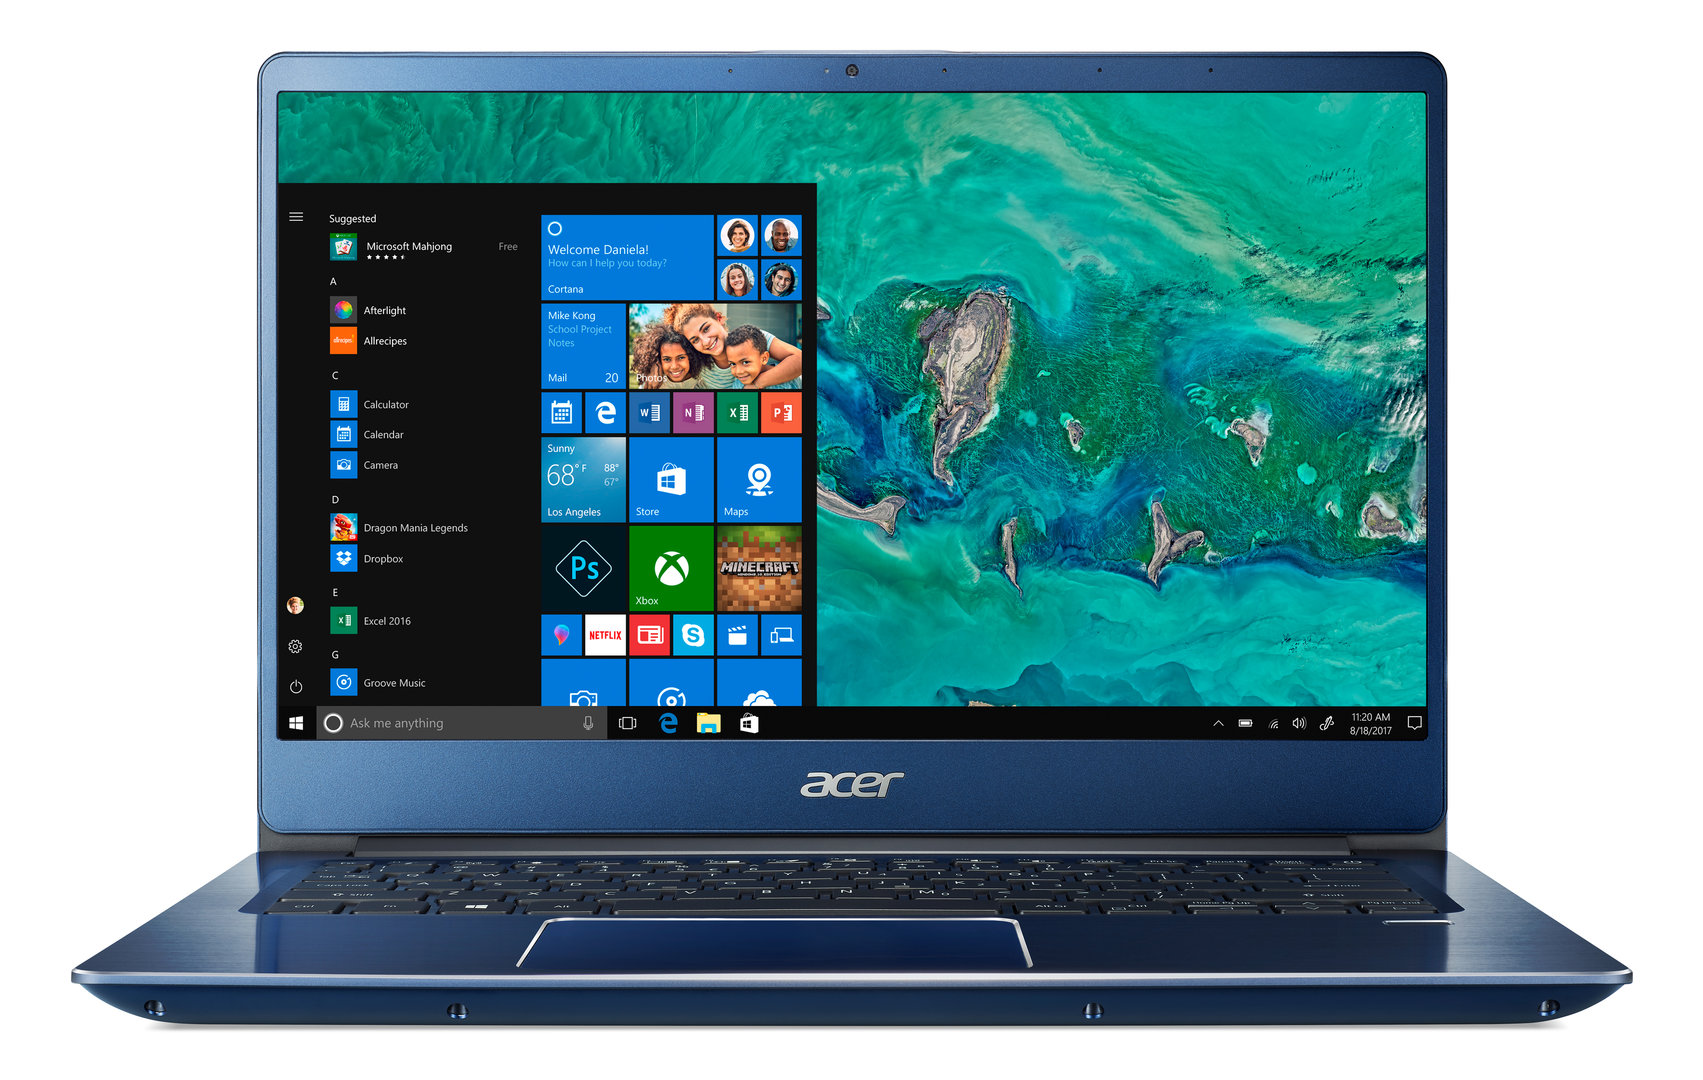 Acer Swift 3 (2018) (14 Zoll) (Blau)